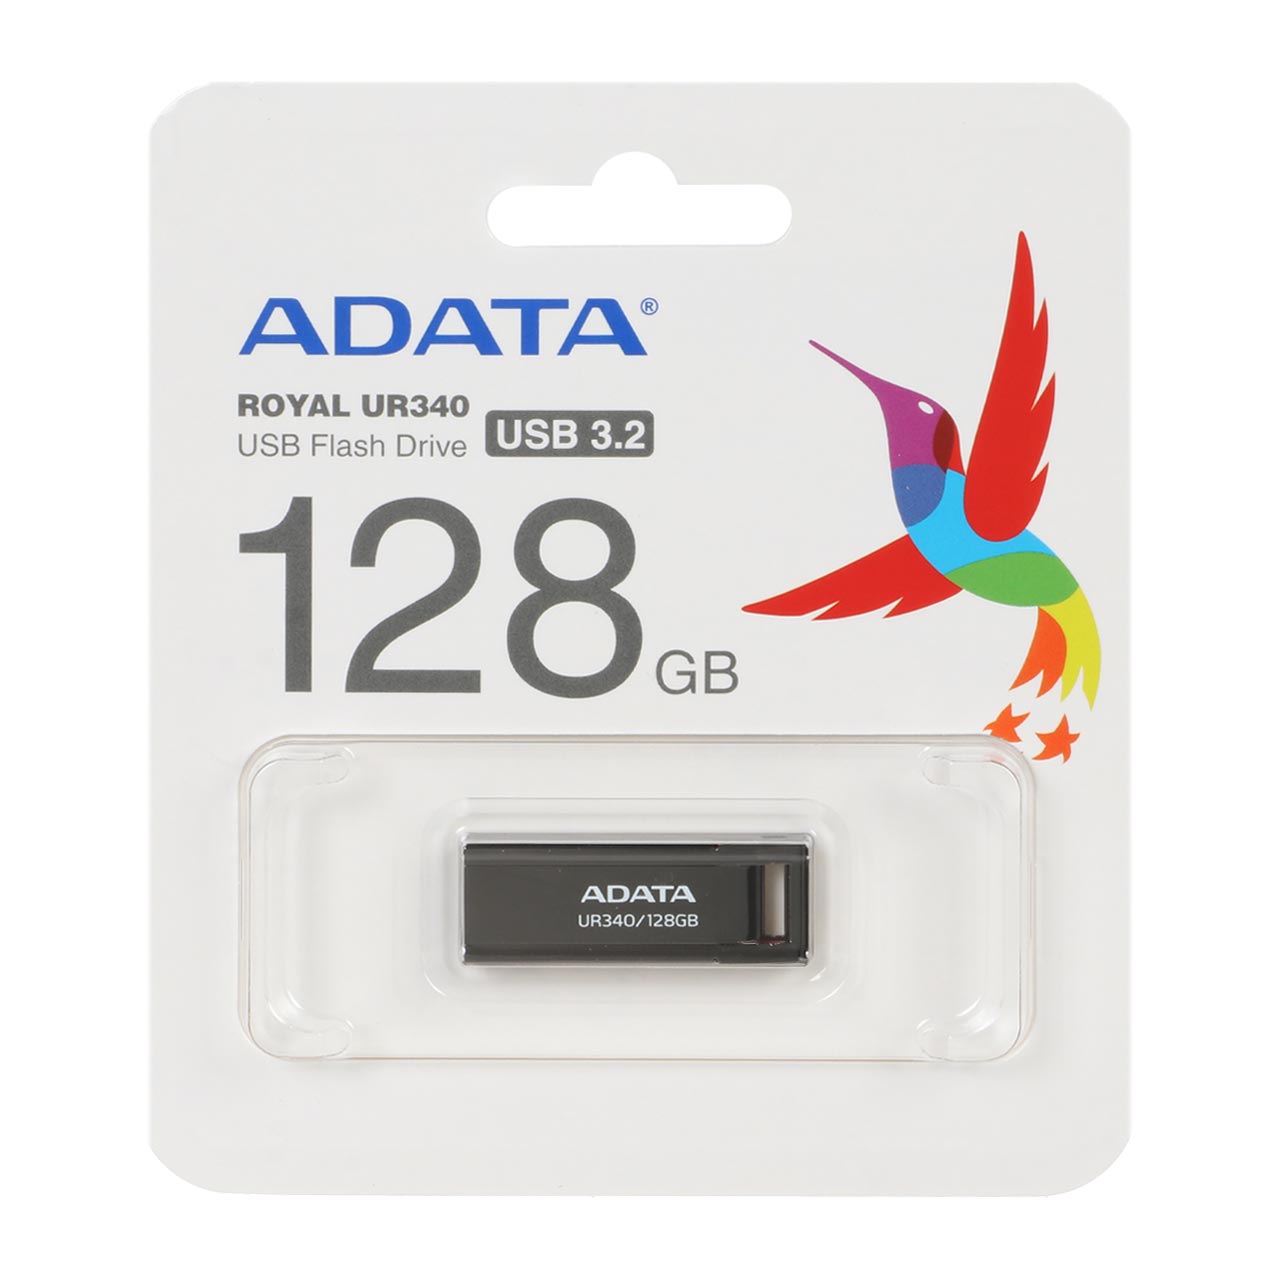 ADATA ROYAL UR340 USB 3.2 Flash Memory - 128GB مشکی - (گارانتی مادام العمر شرکت آونگ #